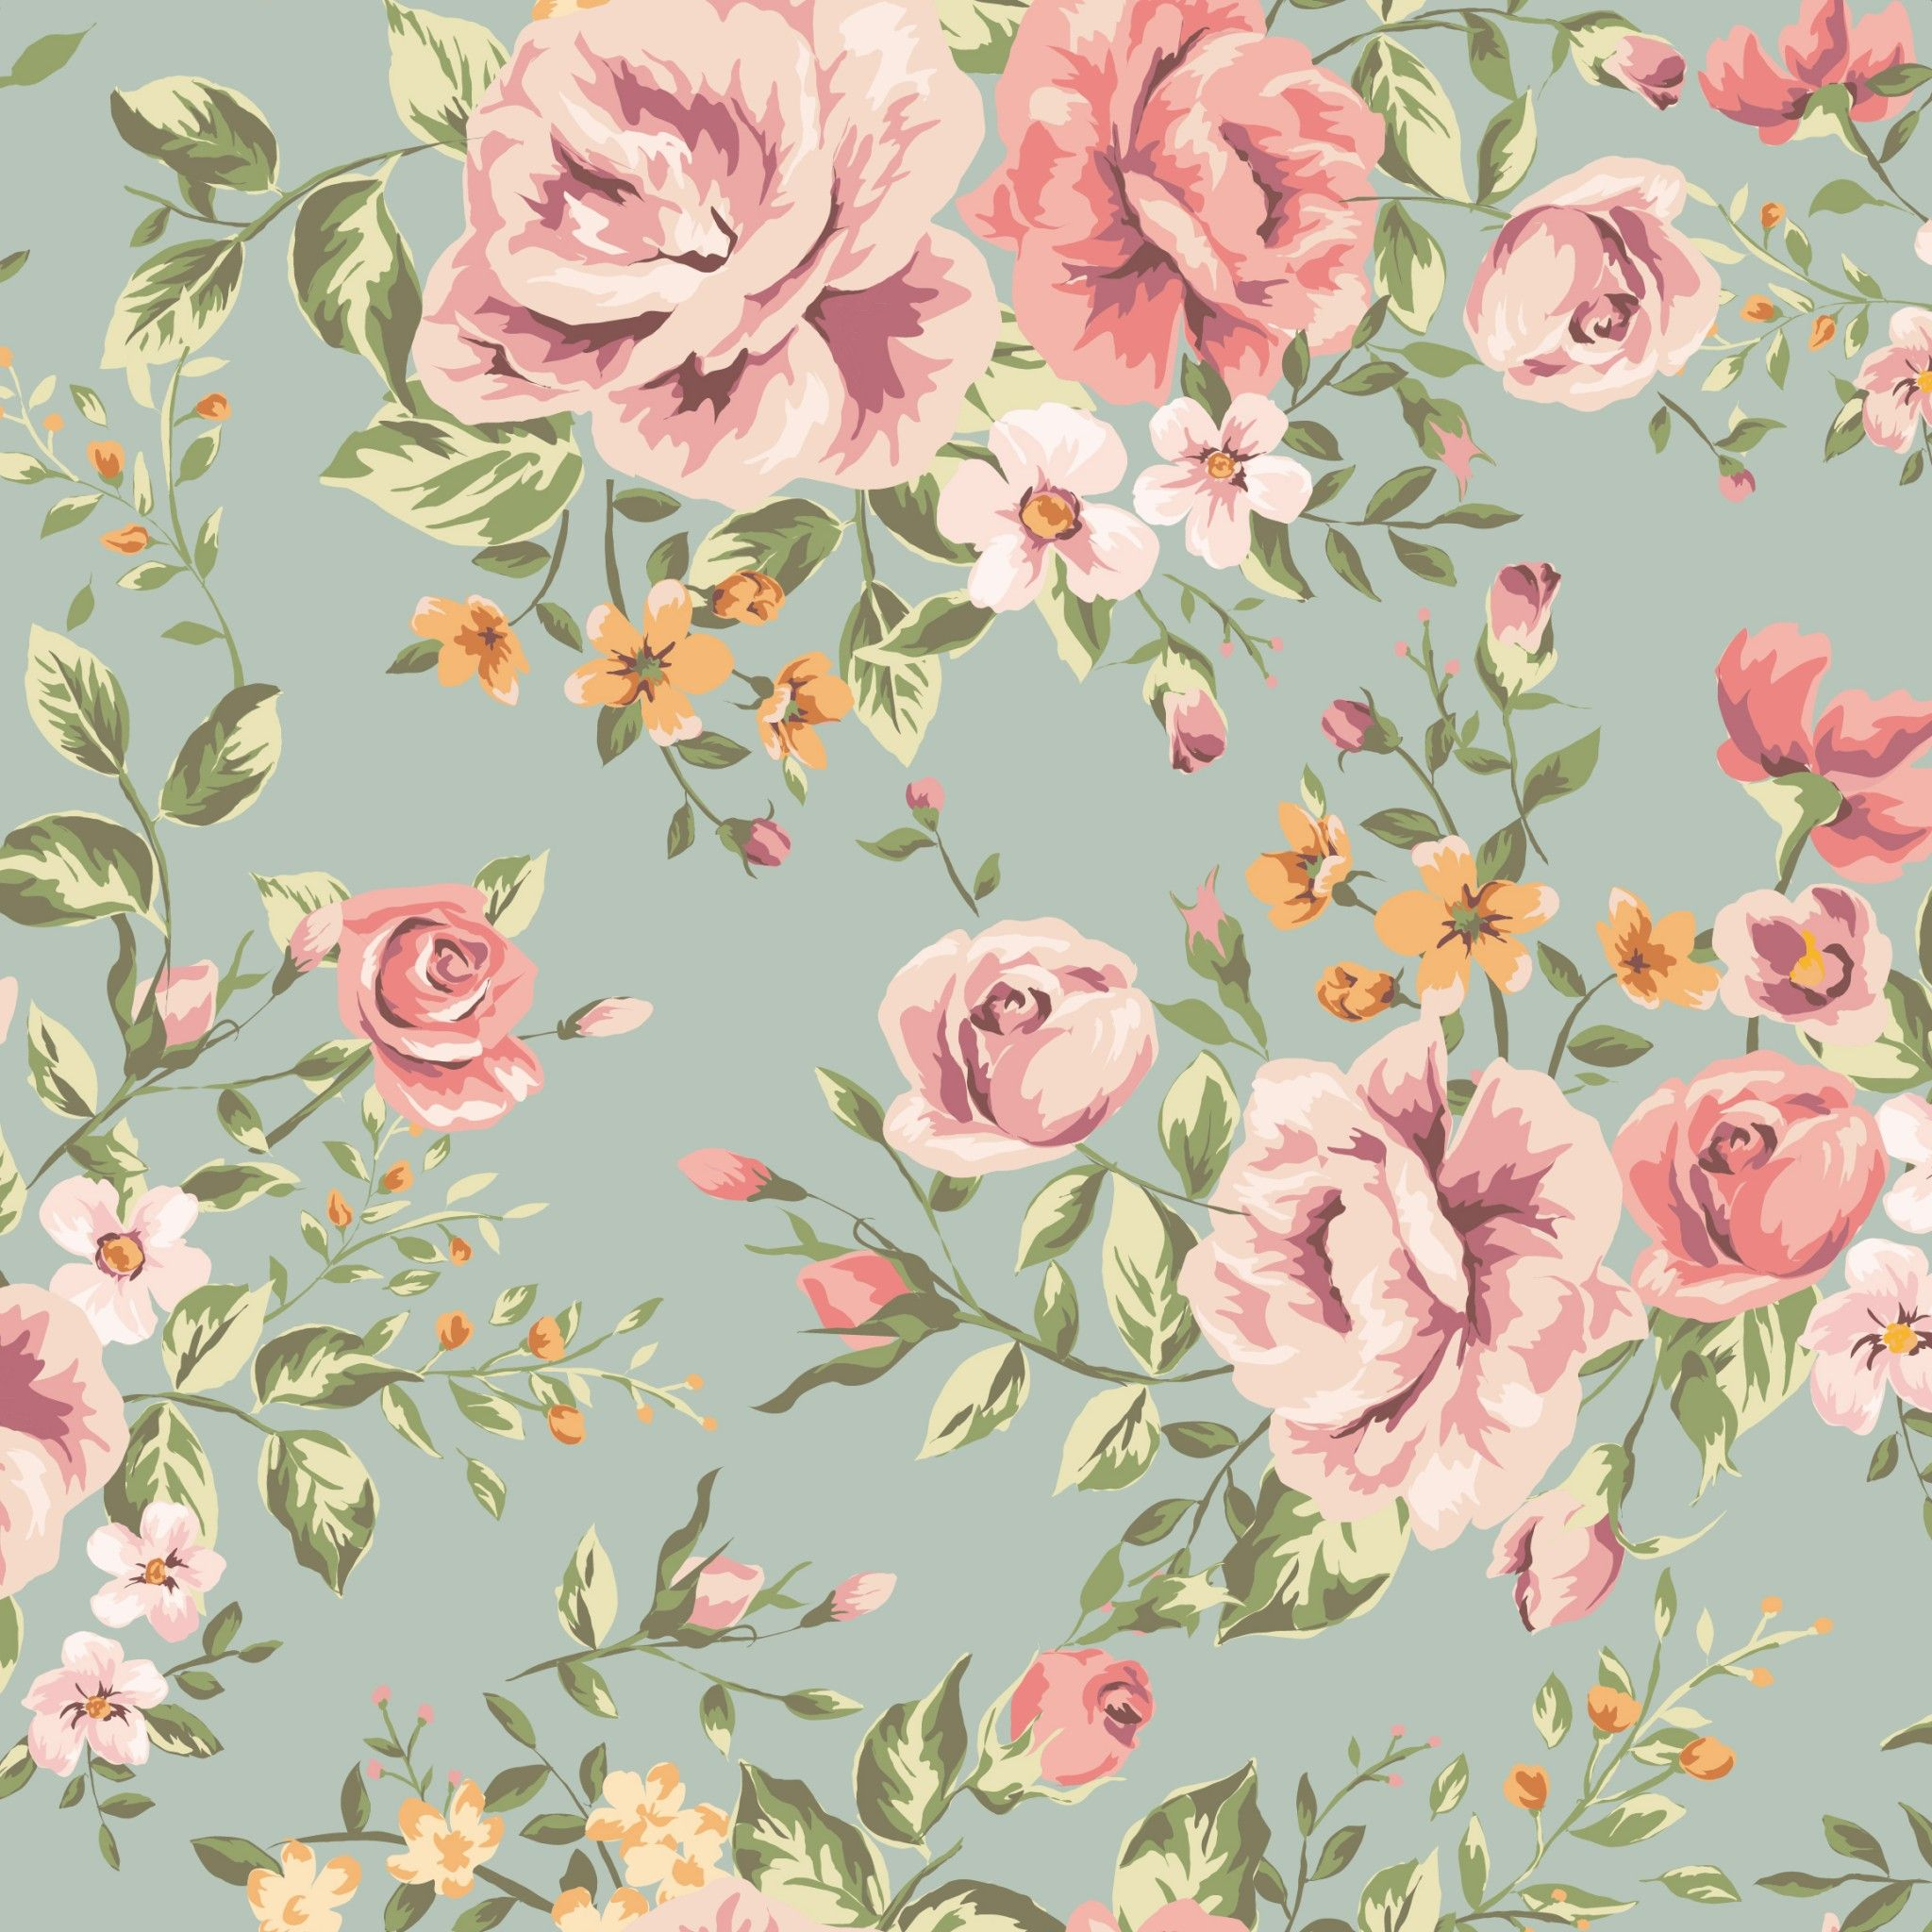 2048x2048 Classic Seamless Vintage Flower Pattern | Vintage floral pattern wallpaper, Floral wallpaper, Vintage flowers wallpaper